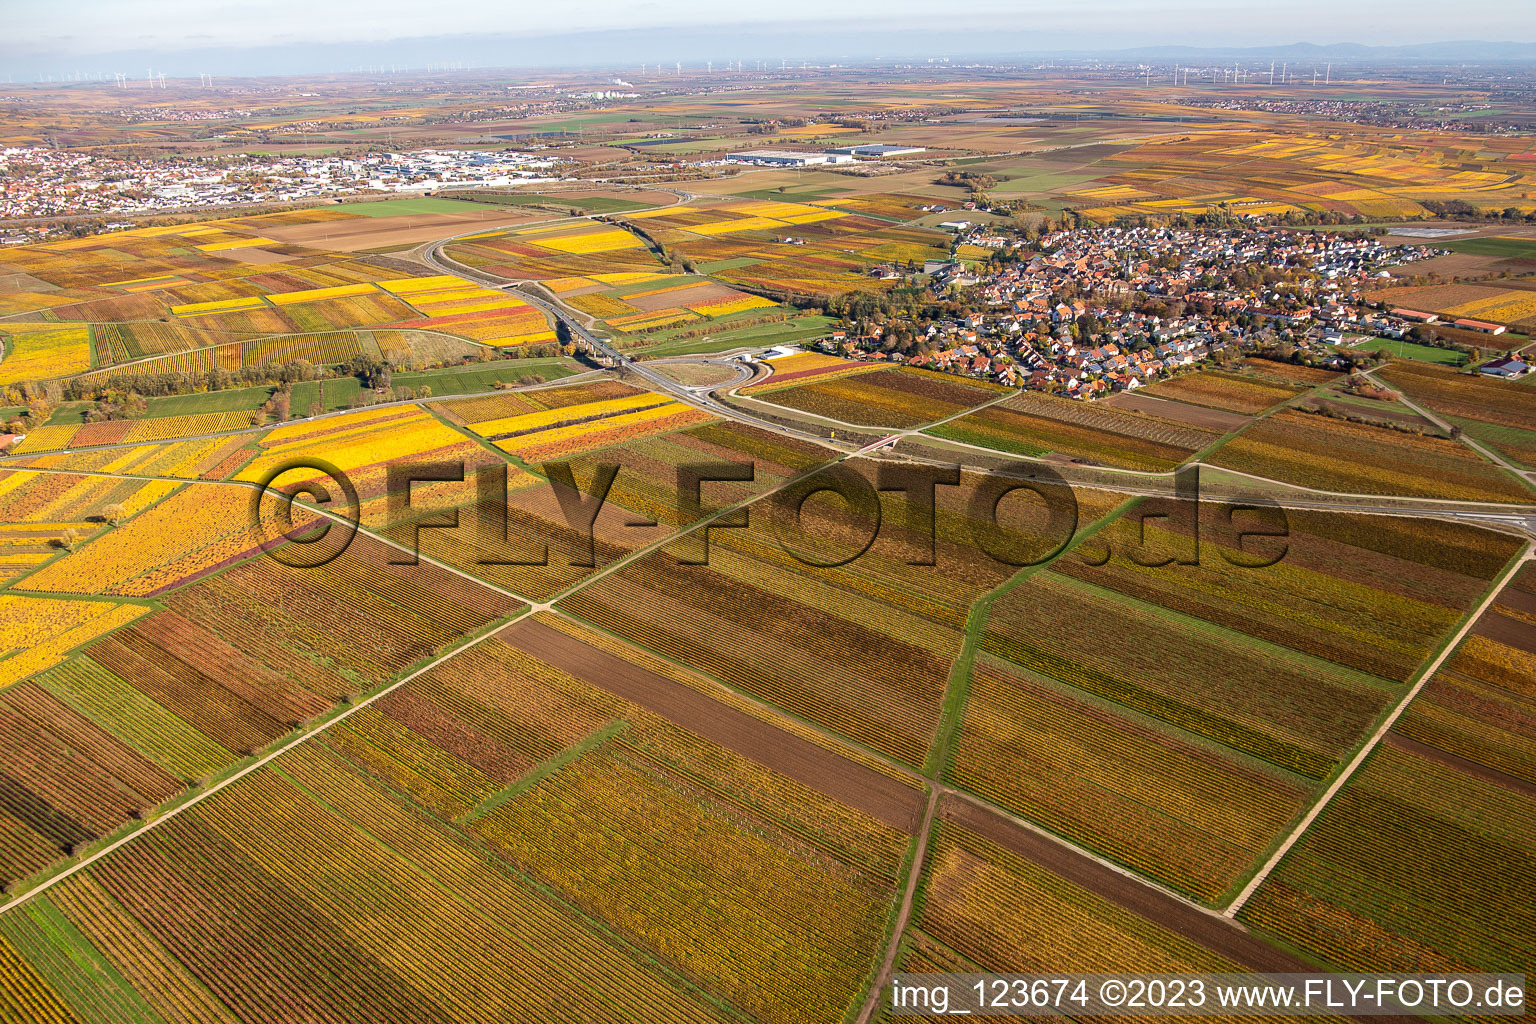 Drone image of Kirchheim an der Weinstraße in the state Rhineland-Palatinate, Germany